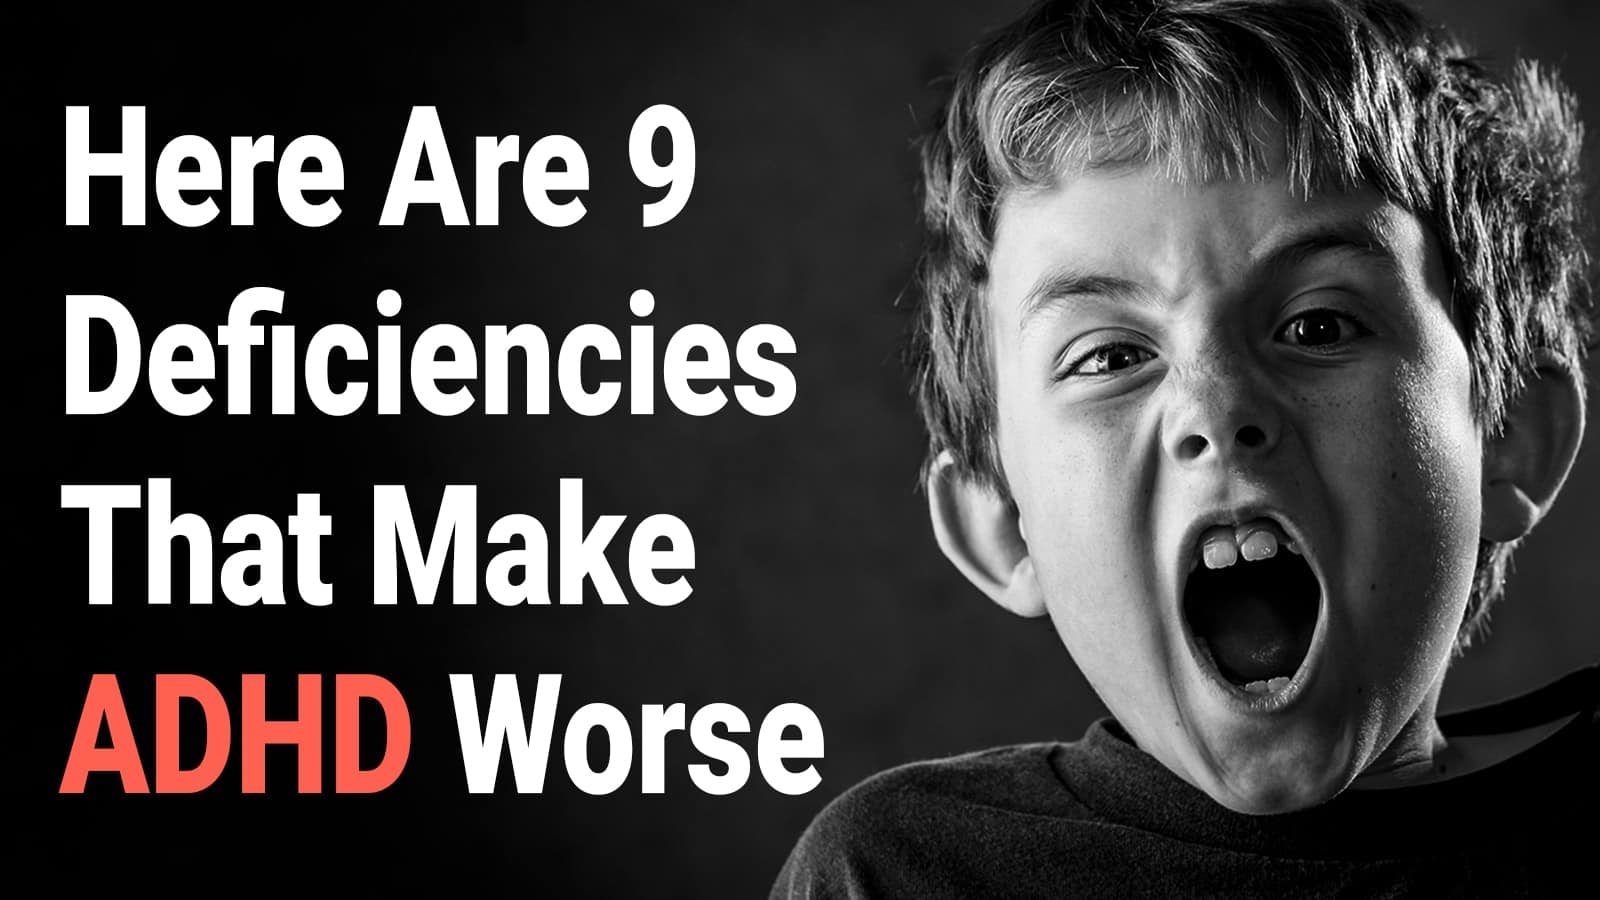 Science Explains 9 Deficiencies That Make ADHD Worse